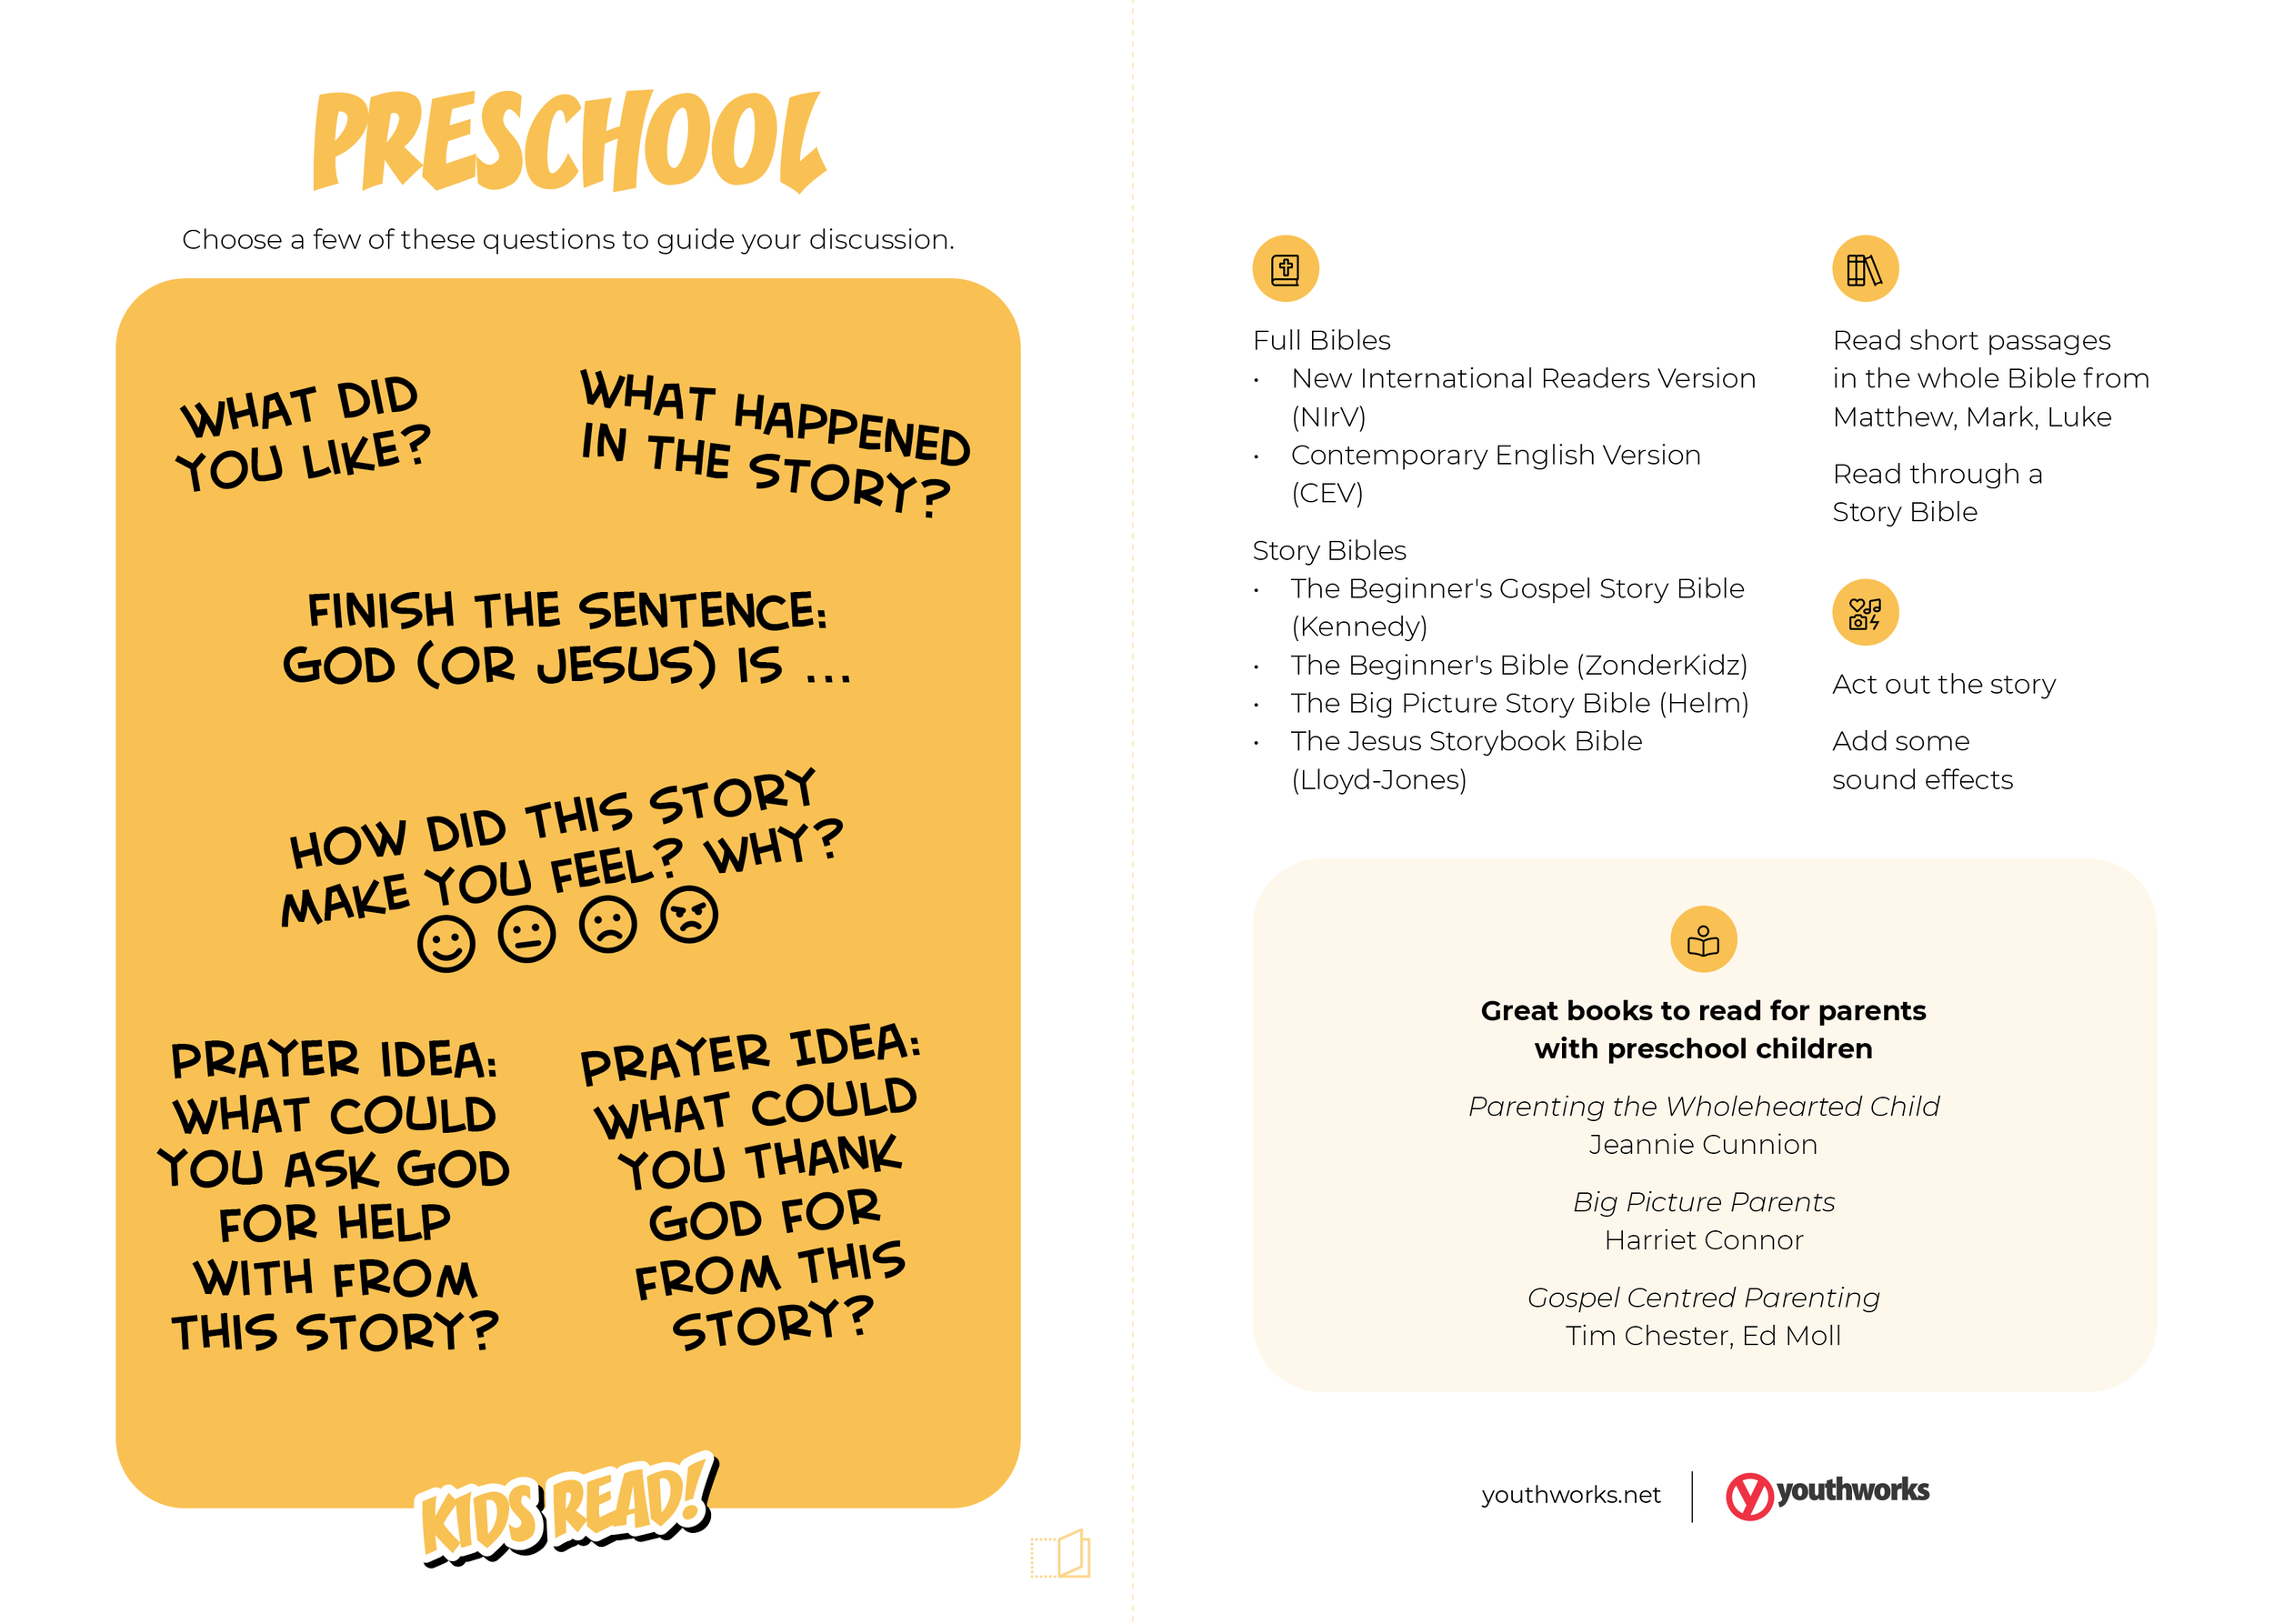 Youthworks_Kids_Read_Preschool.png